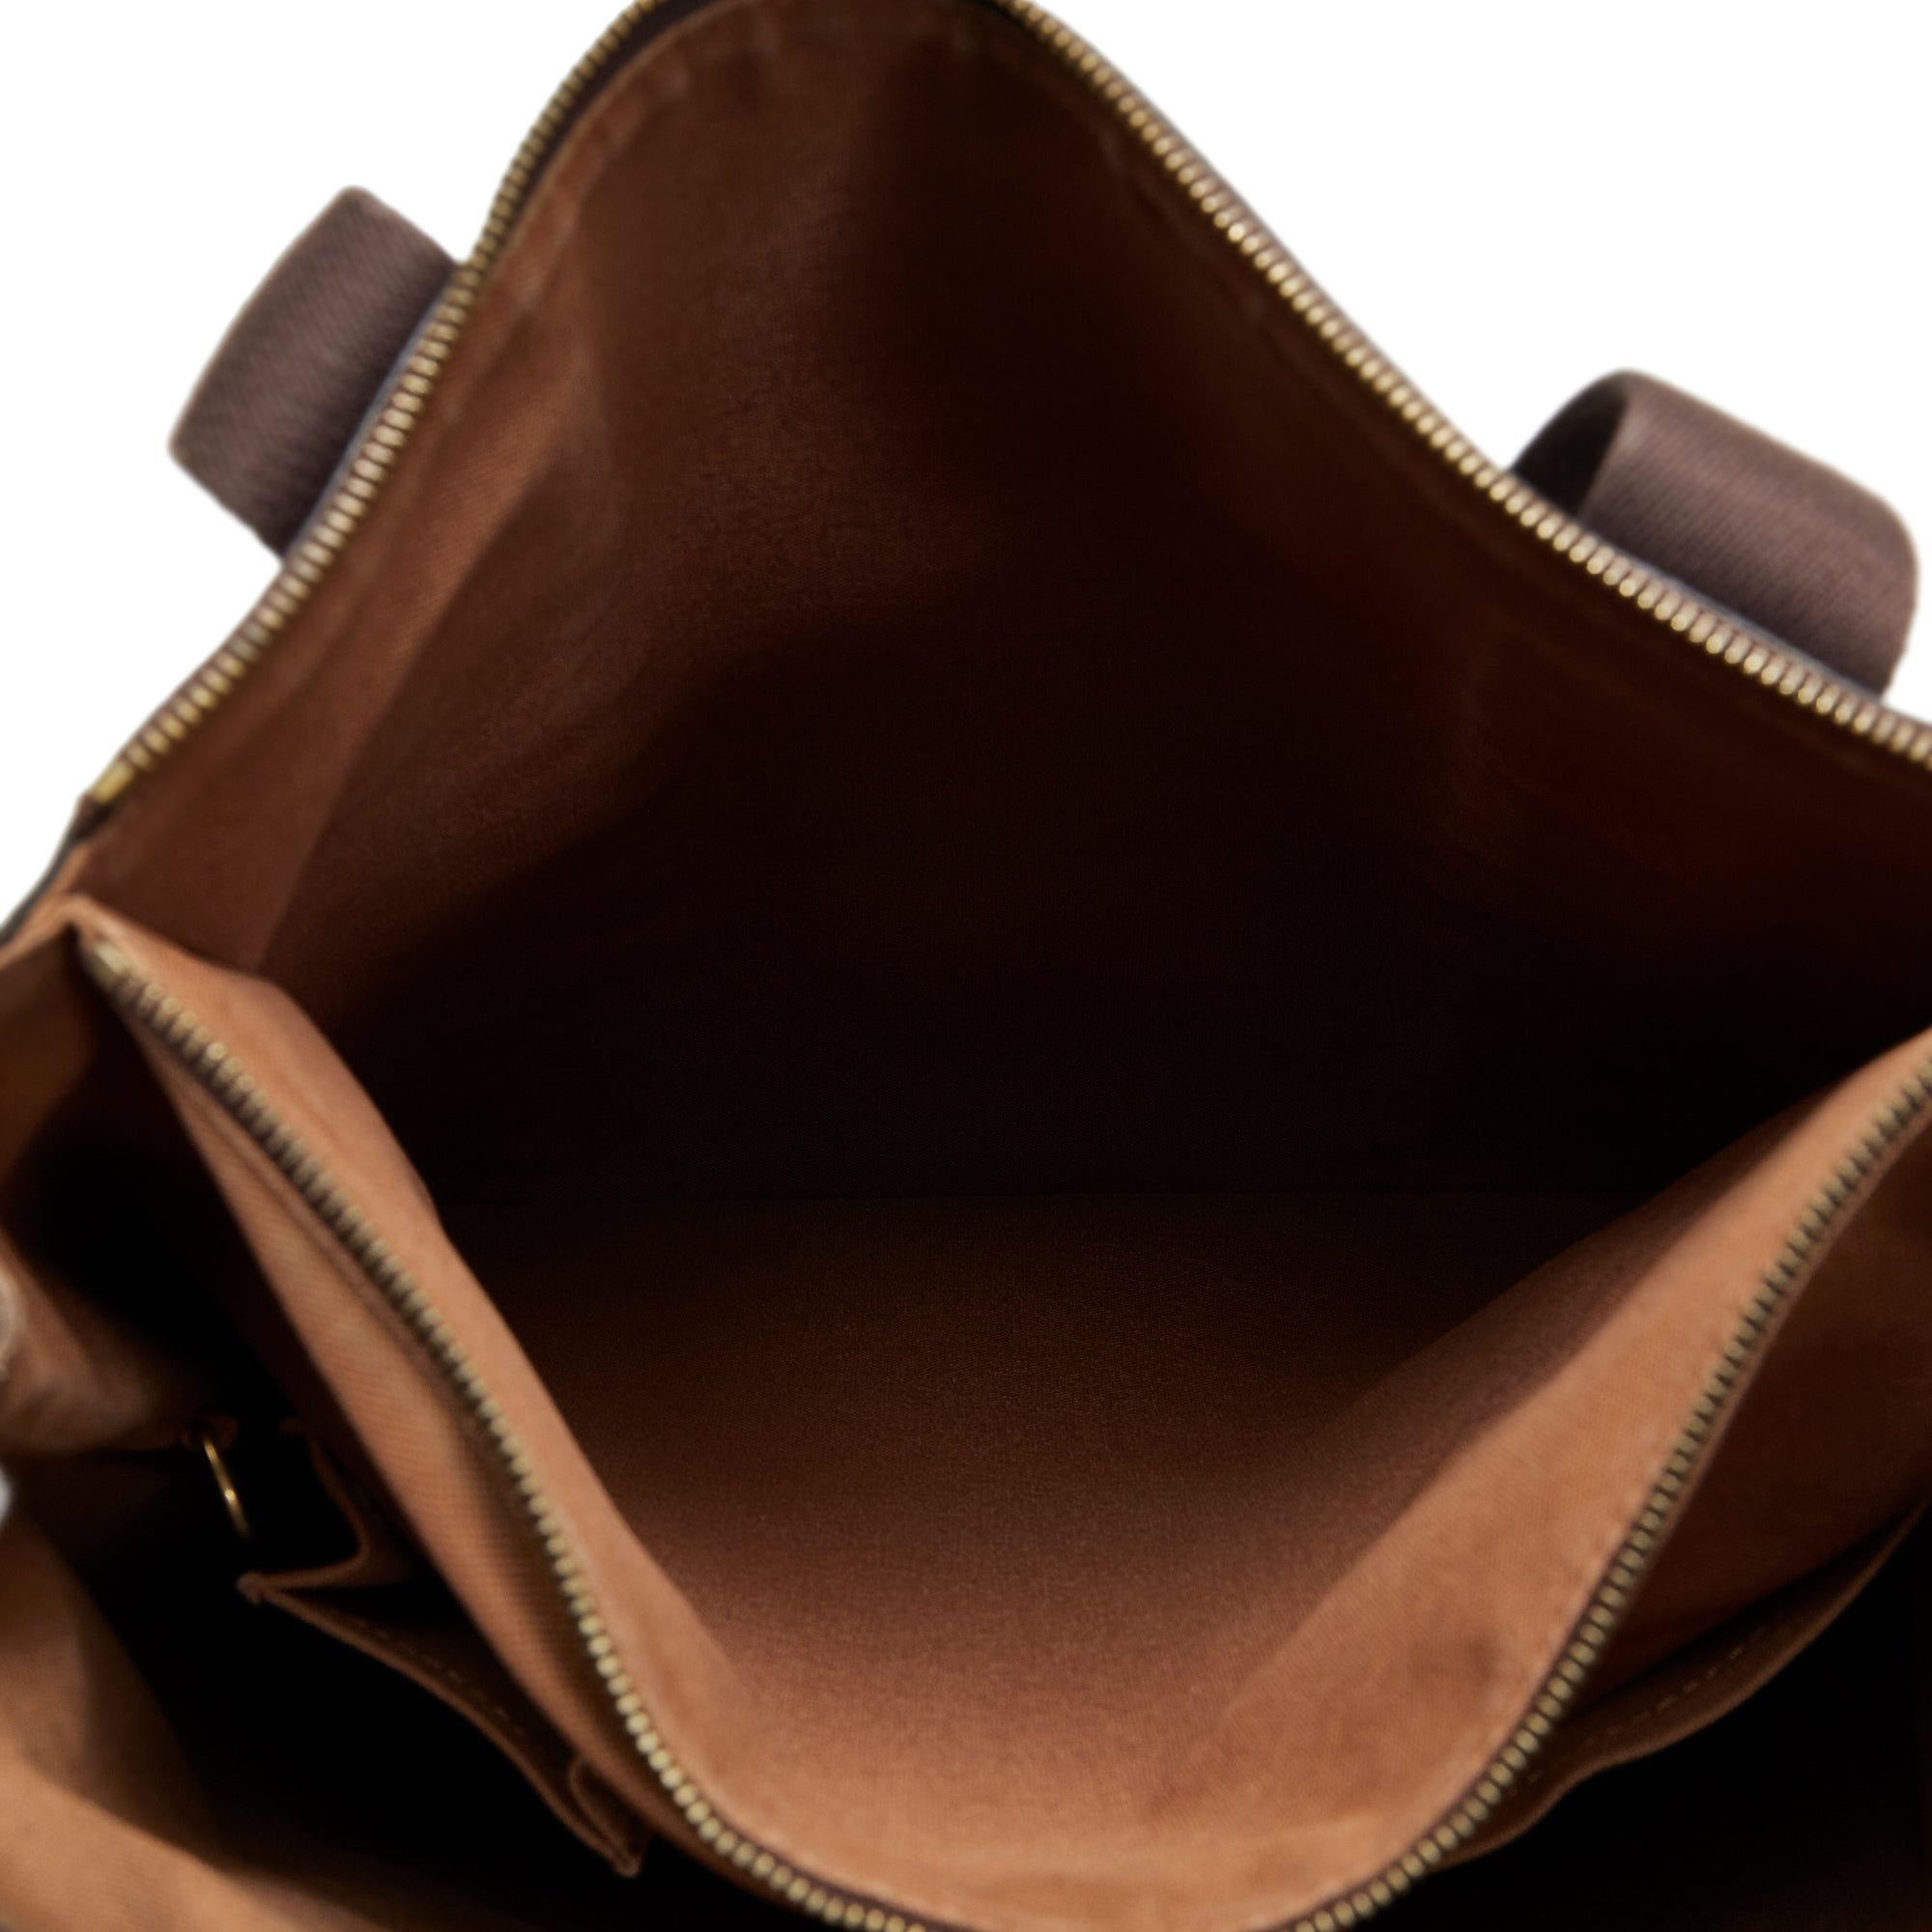 Brown Louis Vuitton Monogram Cabas Beaubourg Tote Bag – Designer Revival